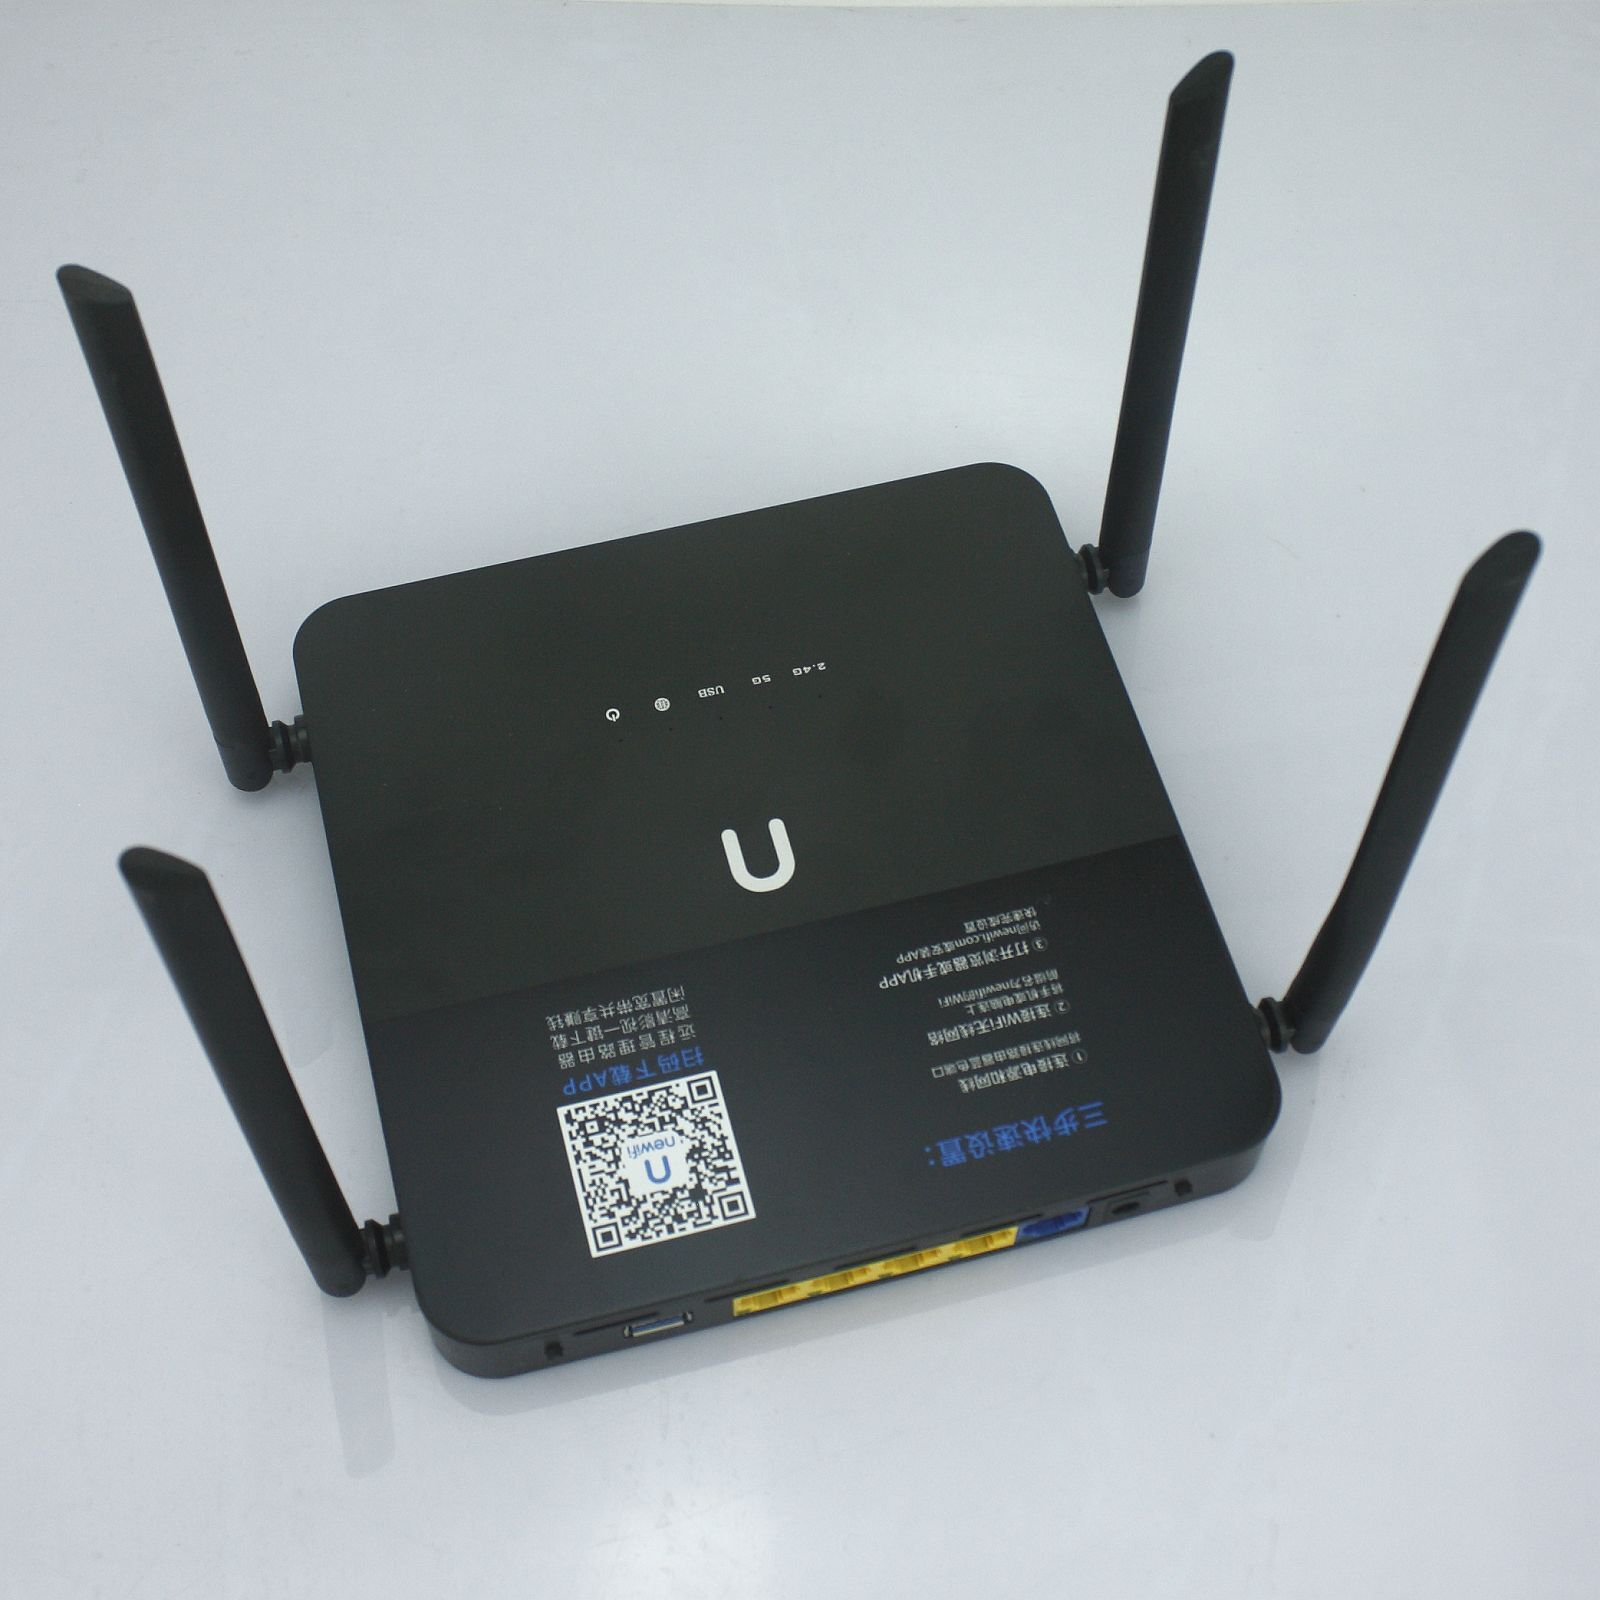 1200M Dual-Band WiFi Gigabit Smart Router asuswrt 4G usb3.0 Share Print Disk app